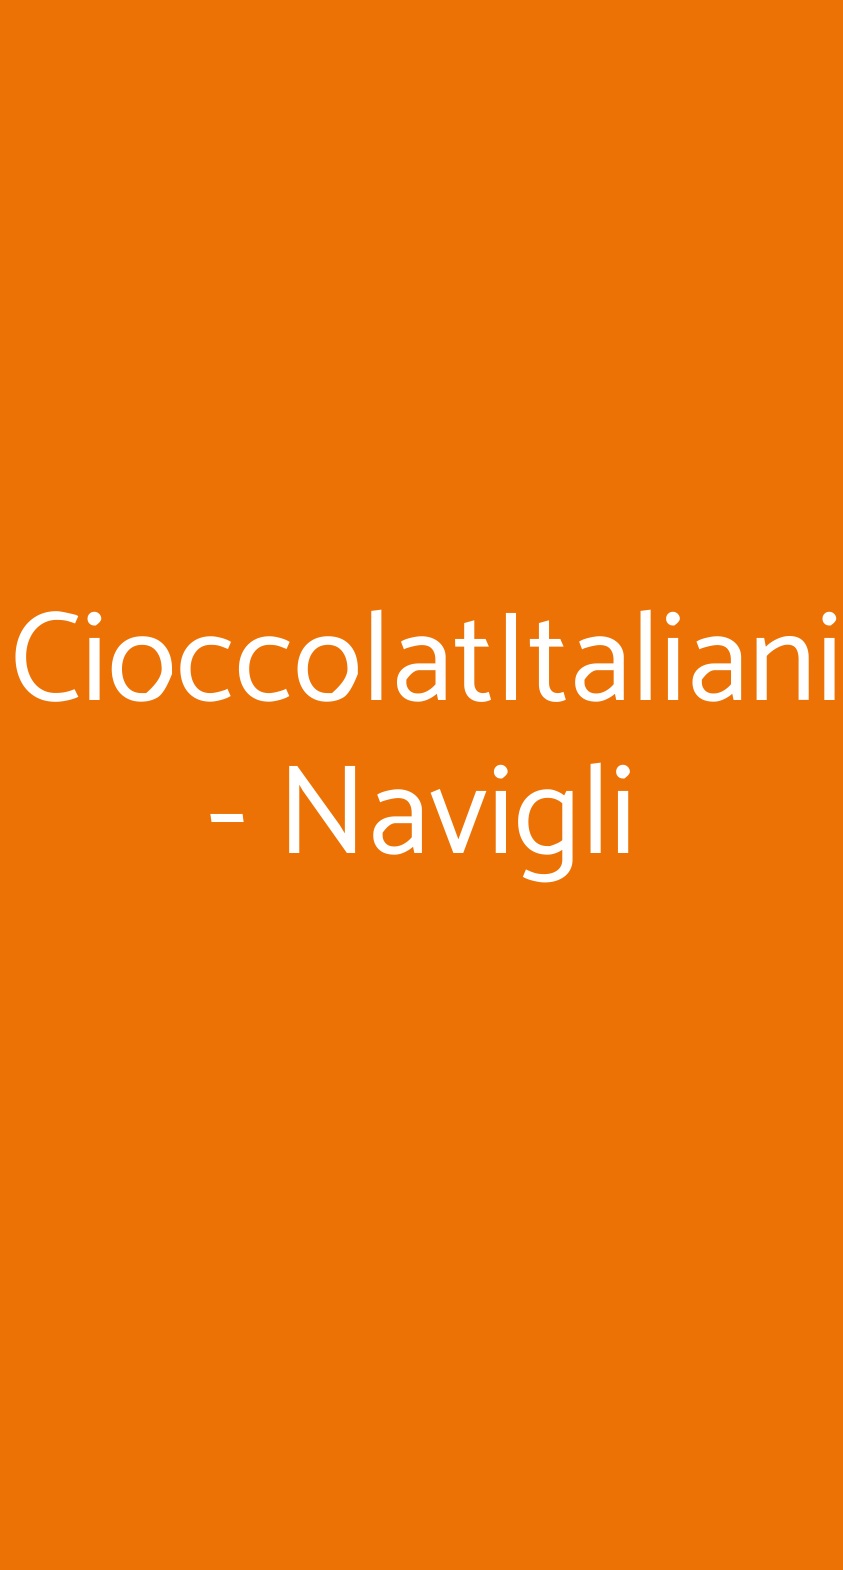 CioccolatItaliani - Navigli Milano menù 1 pagina